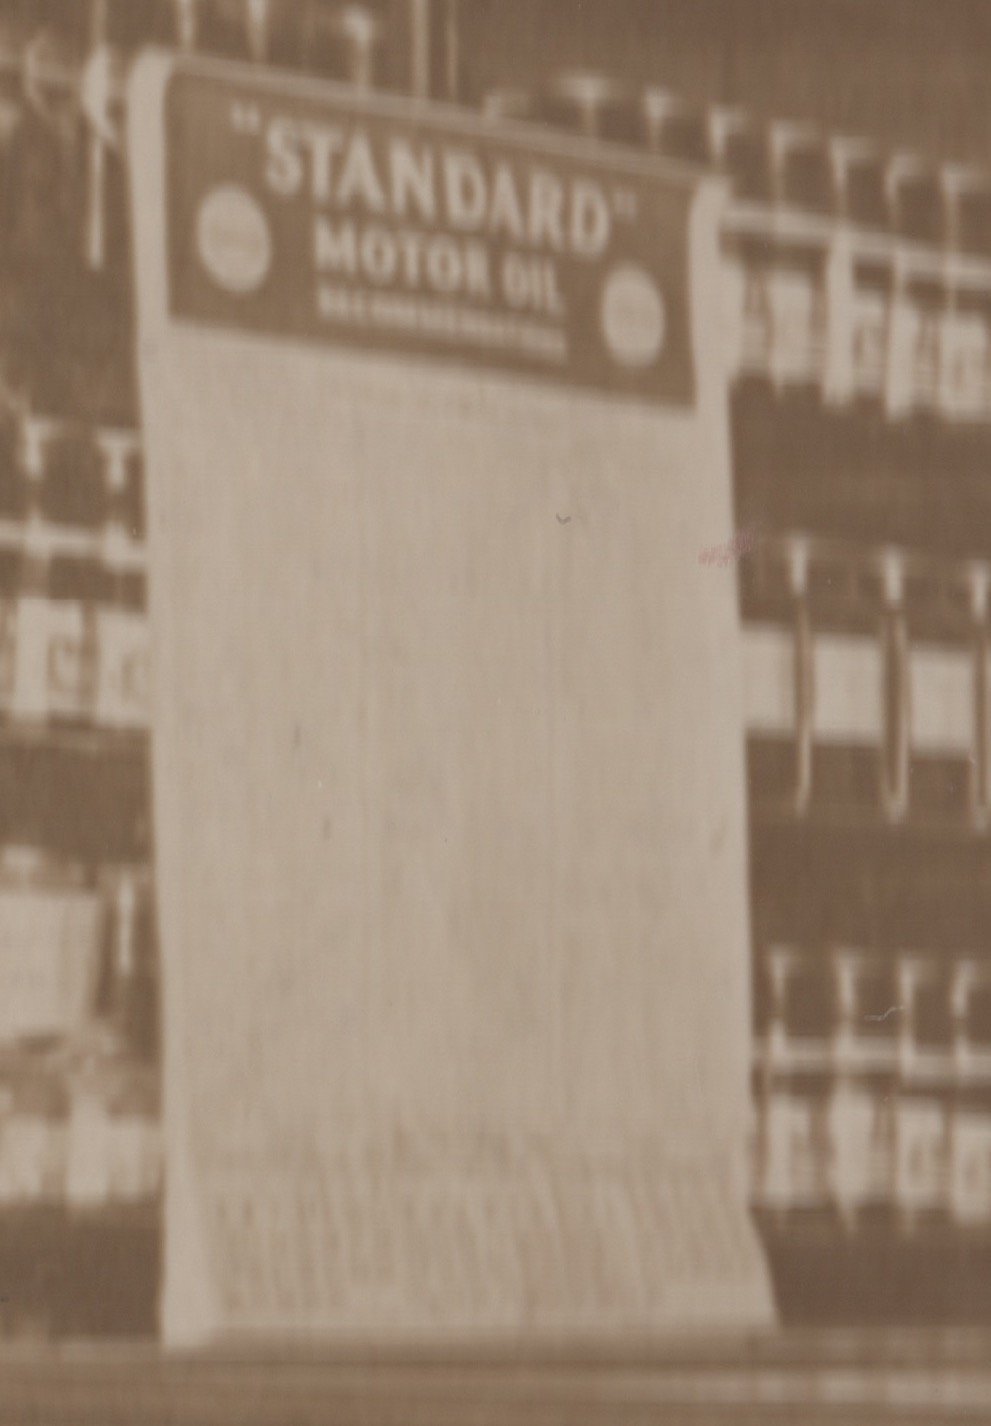 Standard Motor Oil Calendar